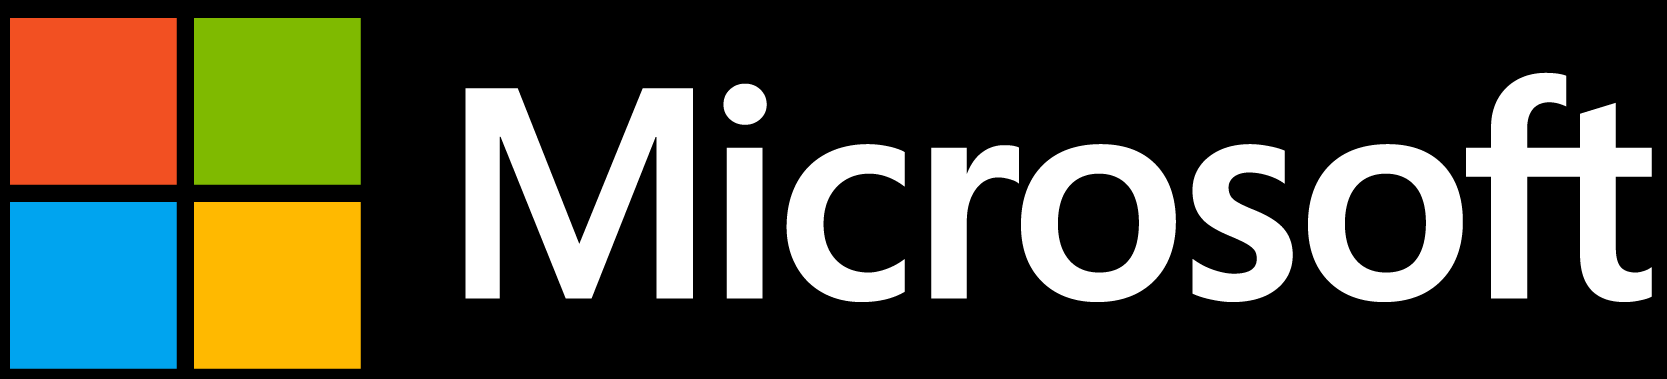 microsoft-logo-white-png.png